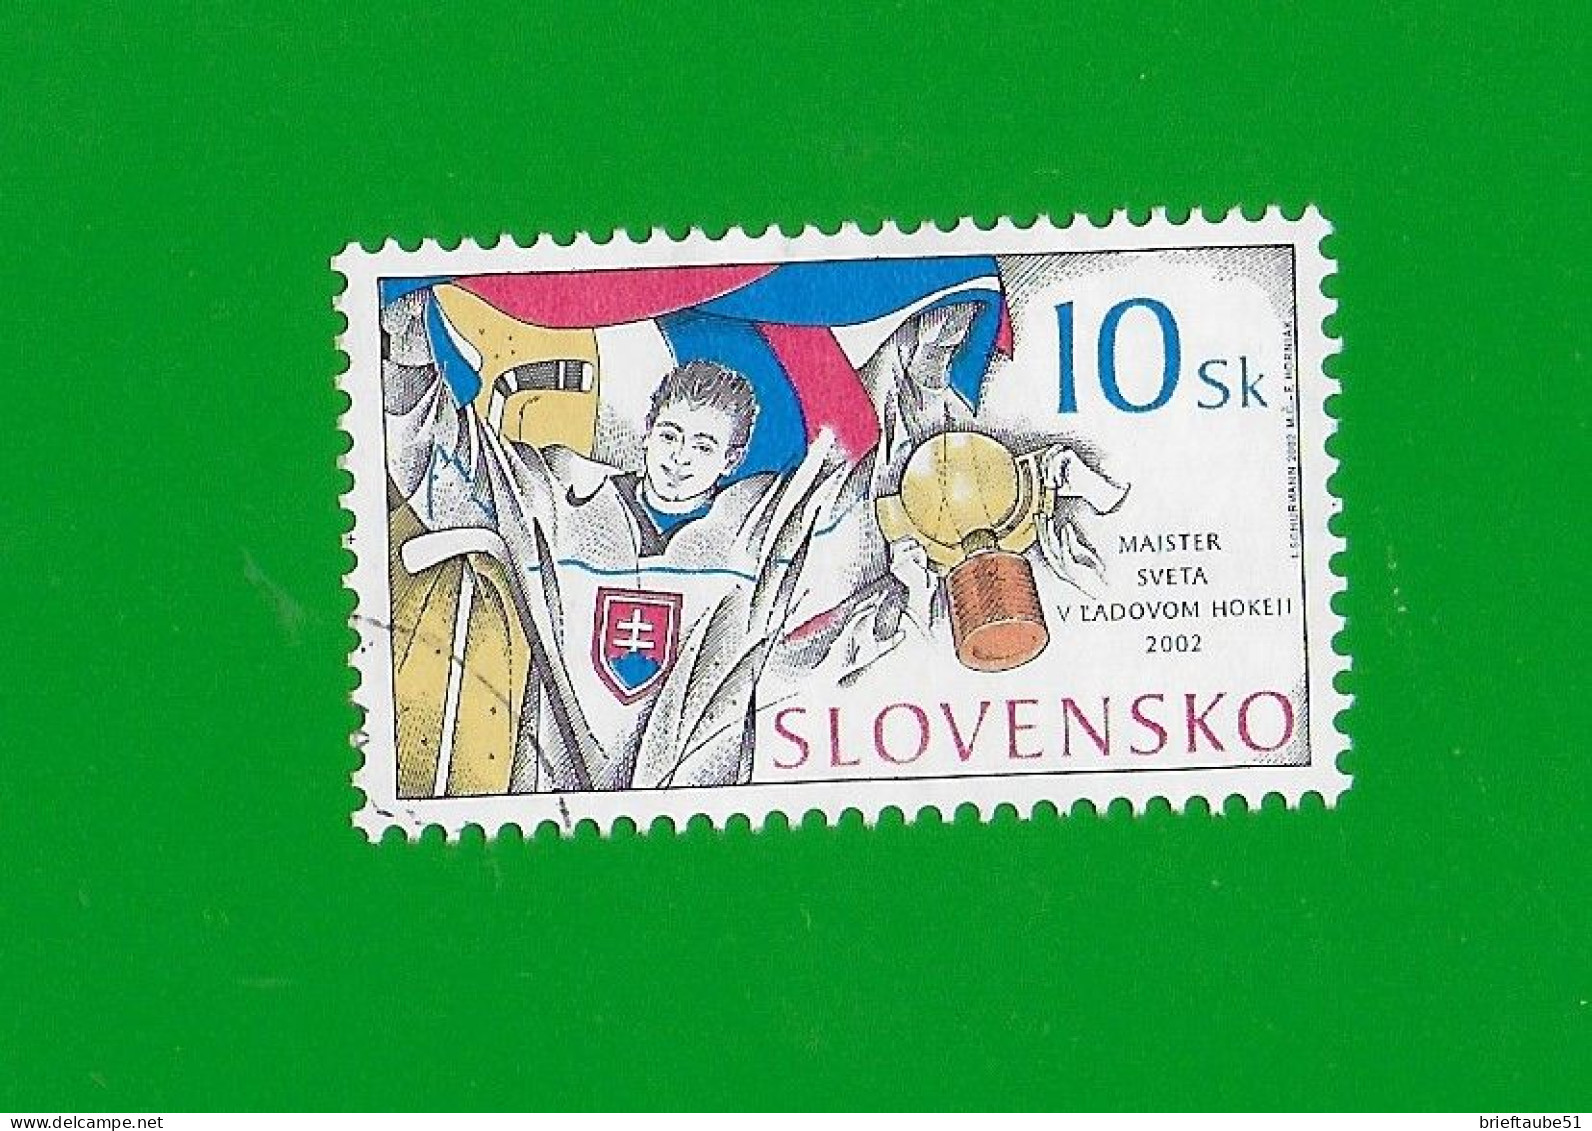 SLOVAKIA REPUBLIC 2002 Gestempelt°Used/Bedarf  MiNr. 432  #  "Eishockey - WM In Schweden # Goldmedaille" - Usados